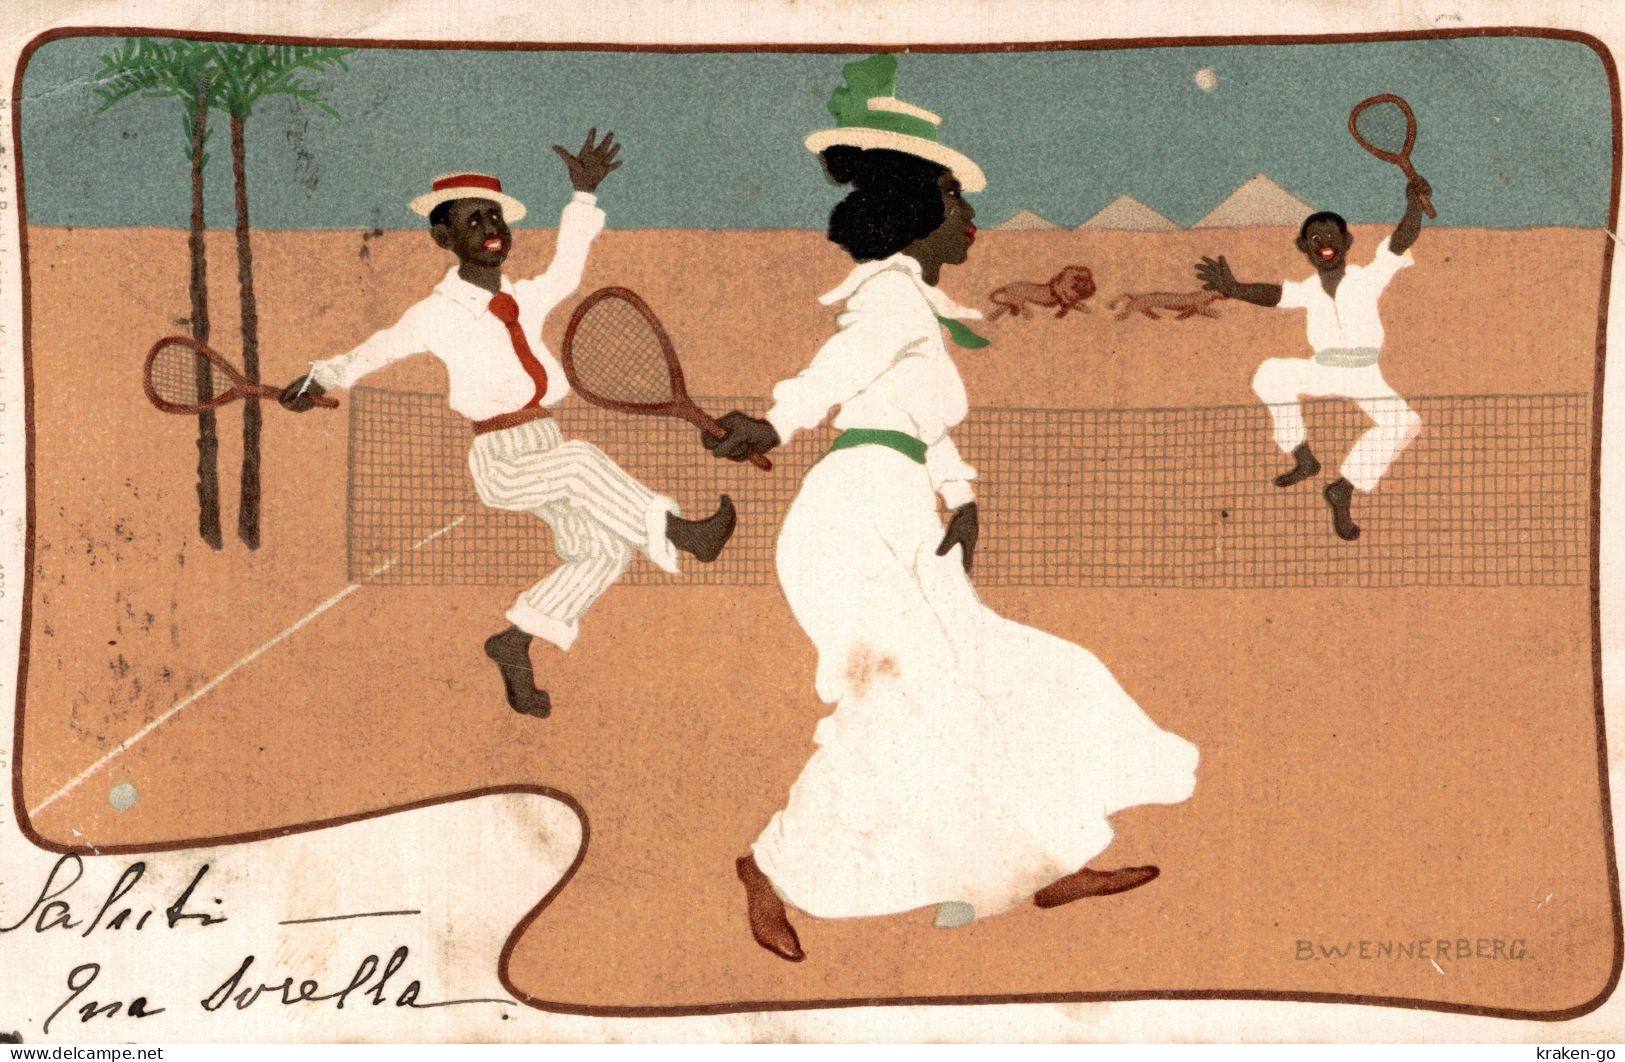 WENNERBERG - Sports TENNIS - Black Americana - Art Nouveau, Liberty - VG - L590 - Wennerberg, B.